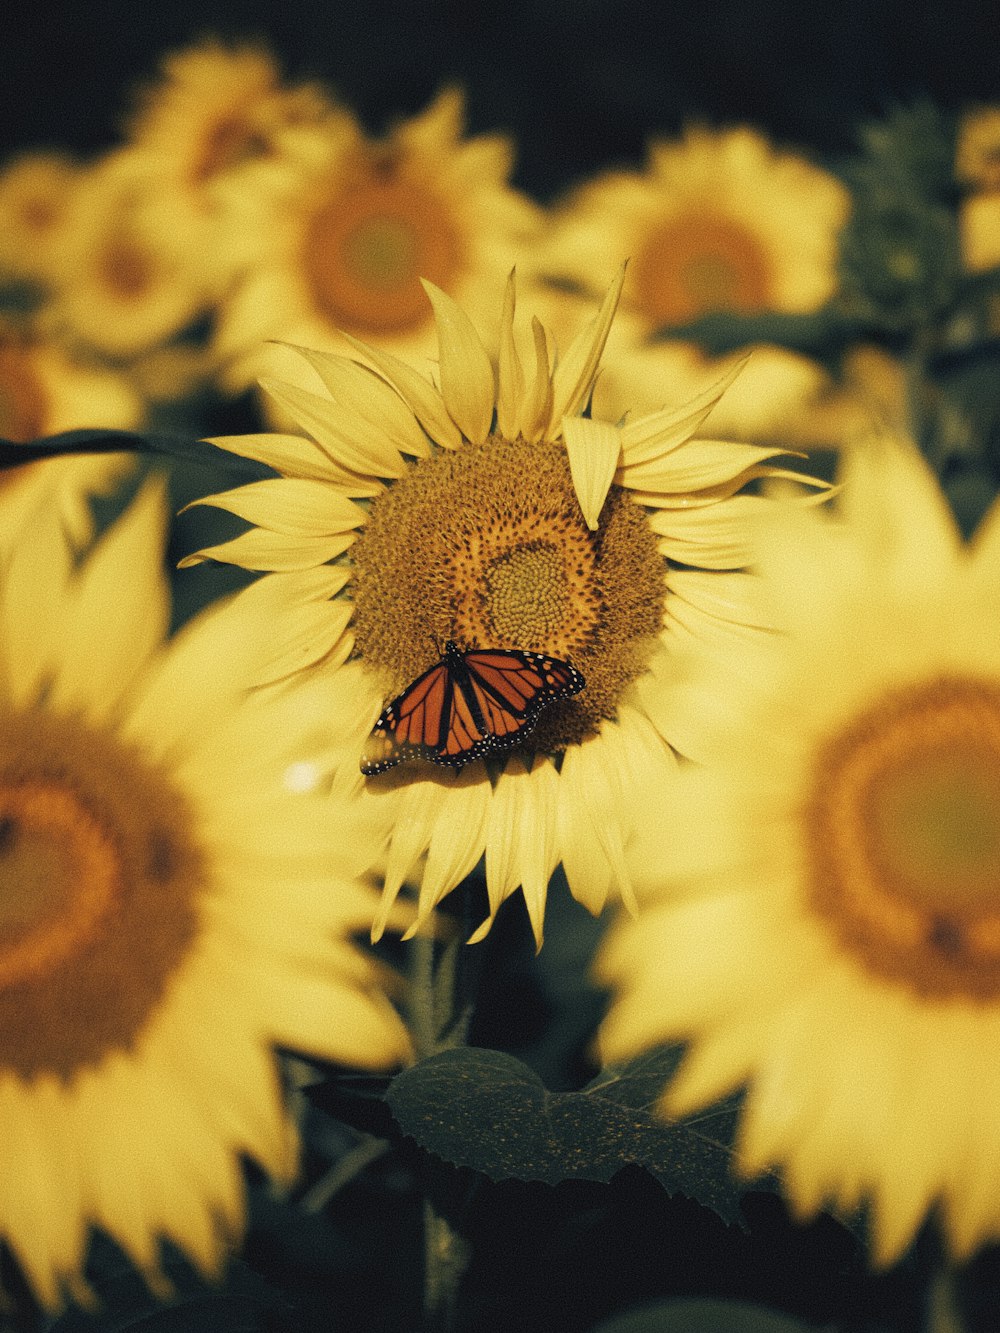 a butterfly sitting on a sunflower in a field